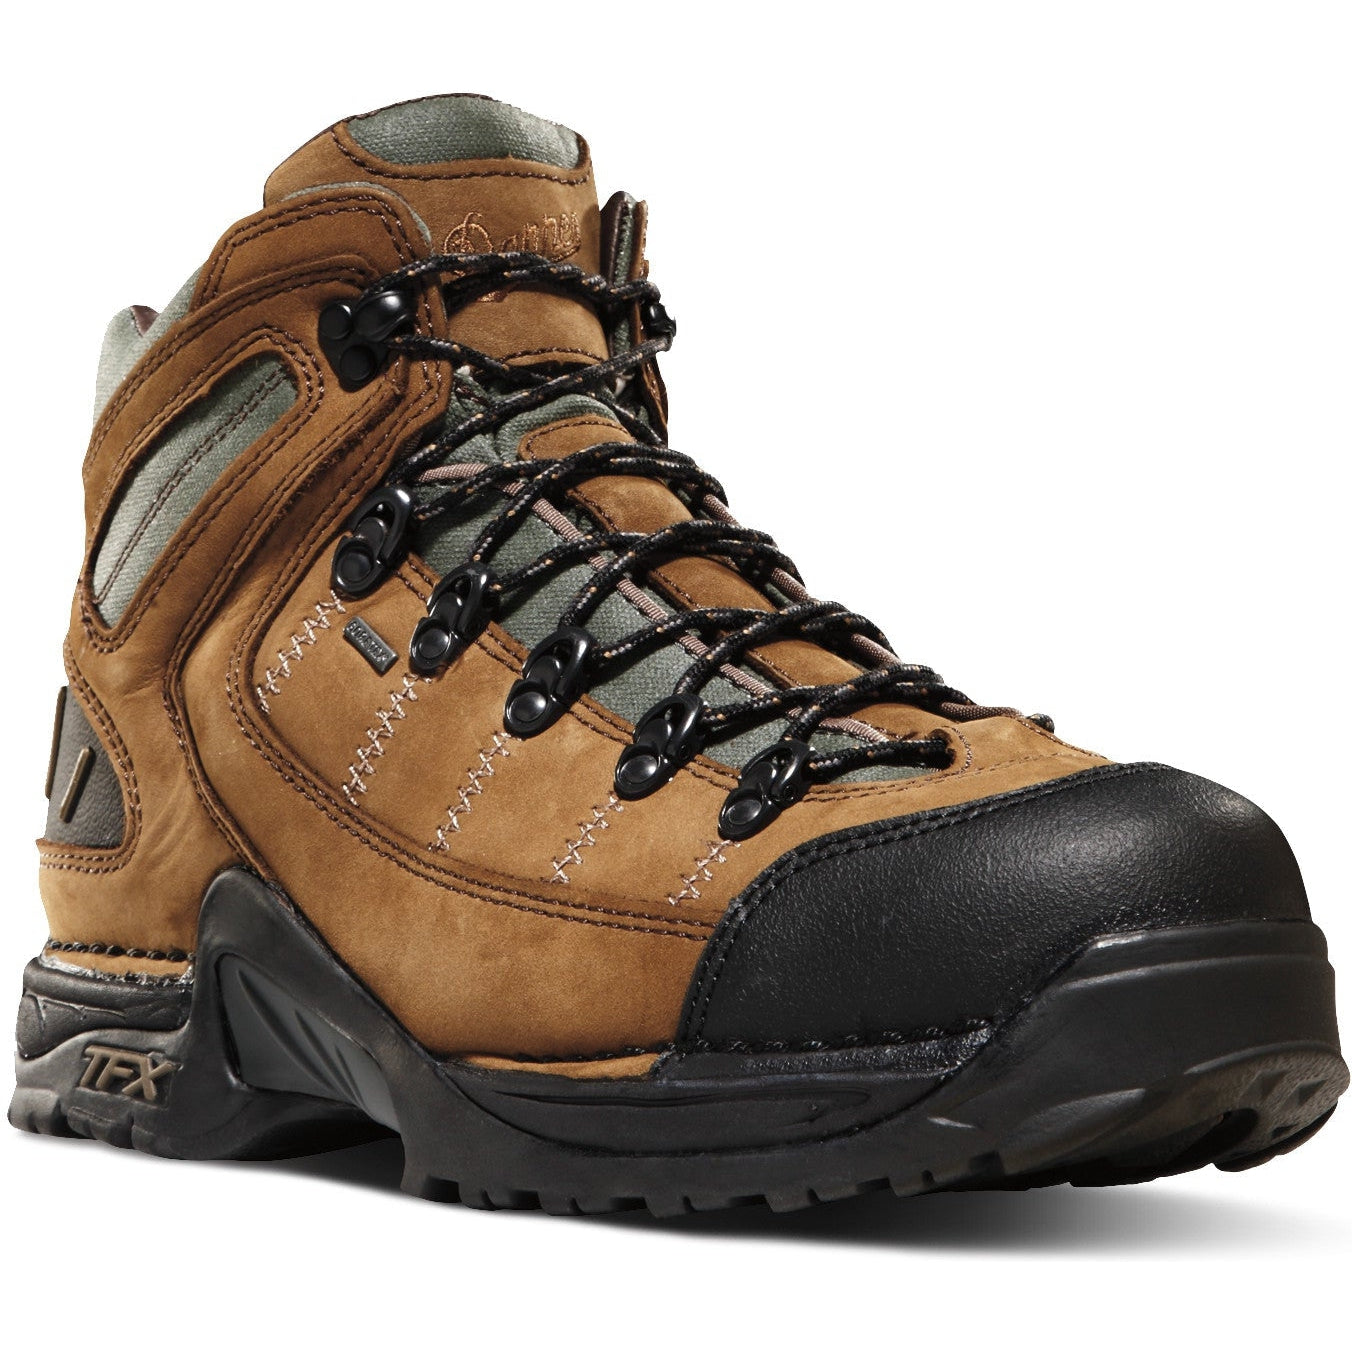 Danner Men's 453 5.5" WP Hiking Boot - Dark Tan - 45364 7 / Medium / Tan - Overlook Boots